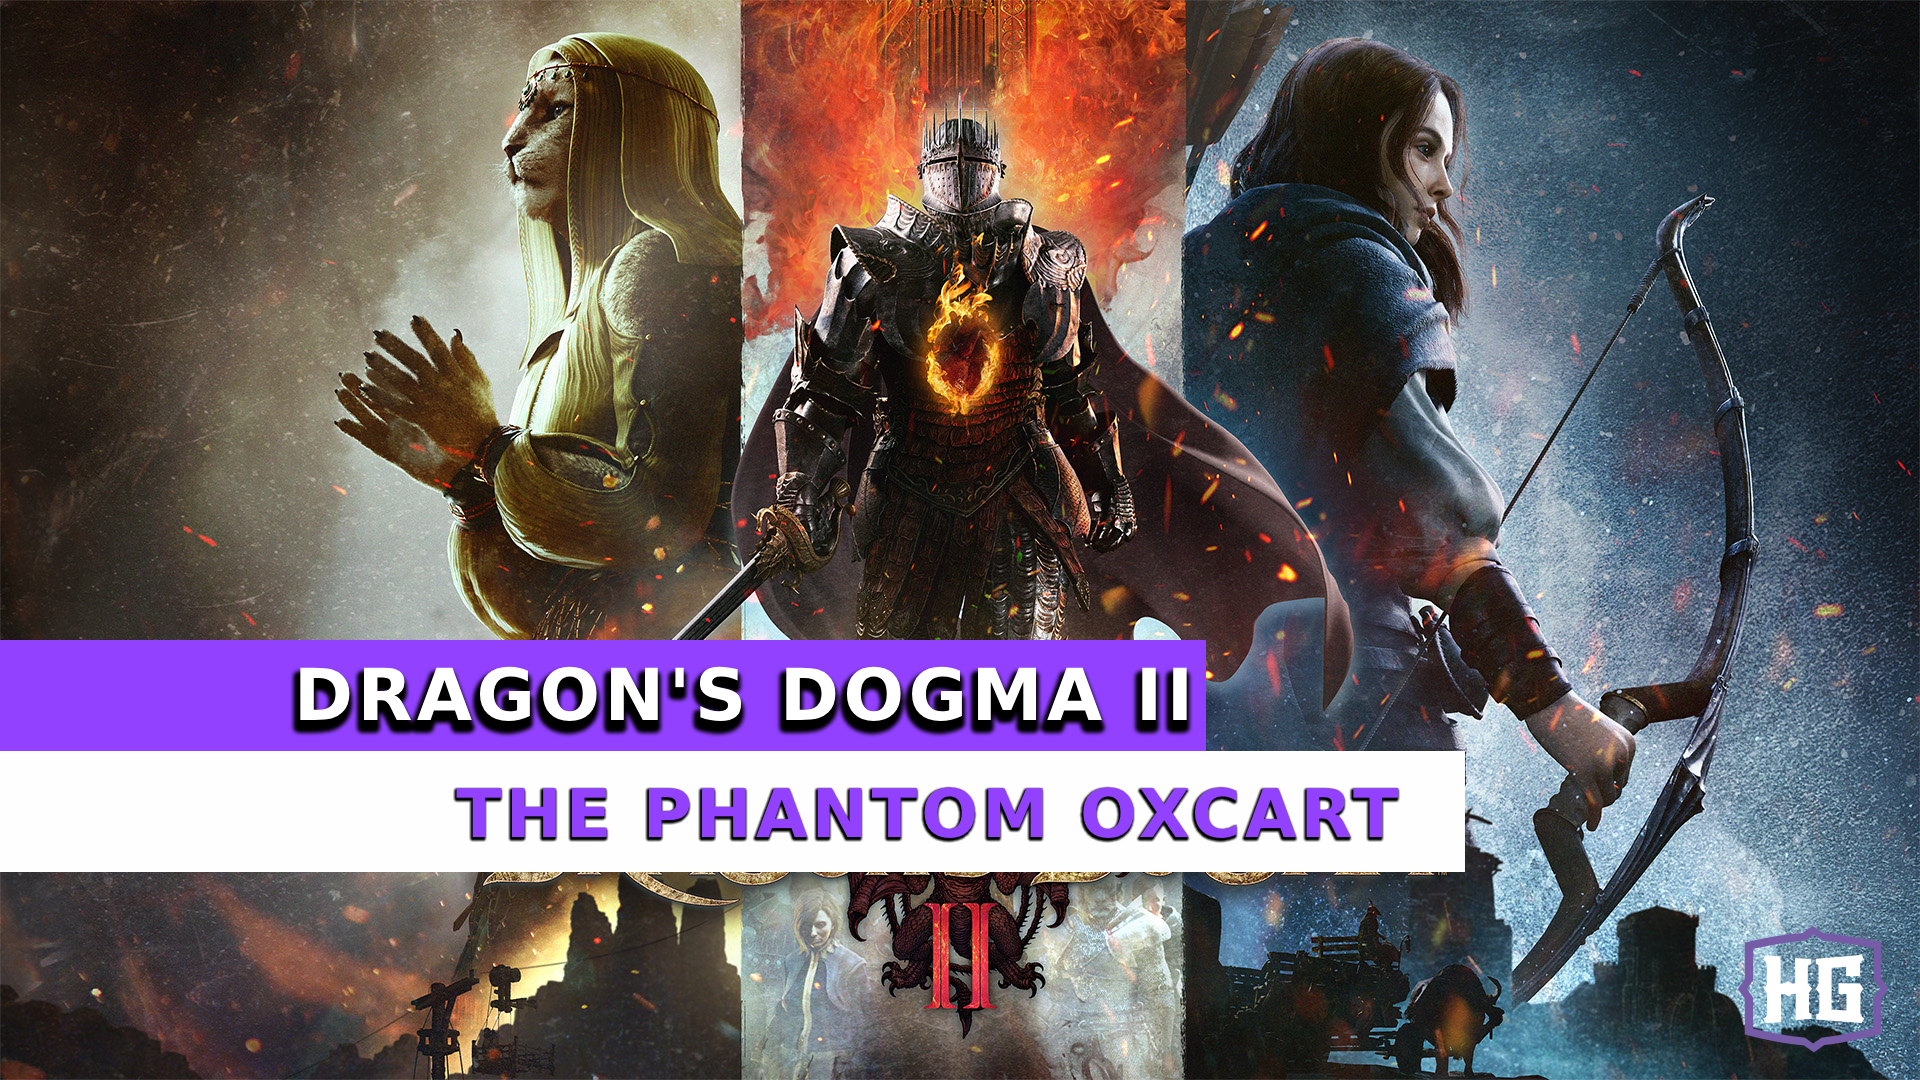 The Phantom Oxcart